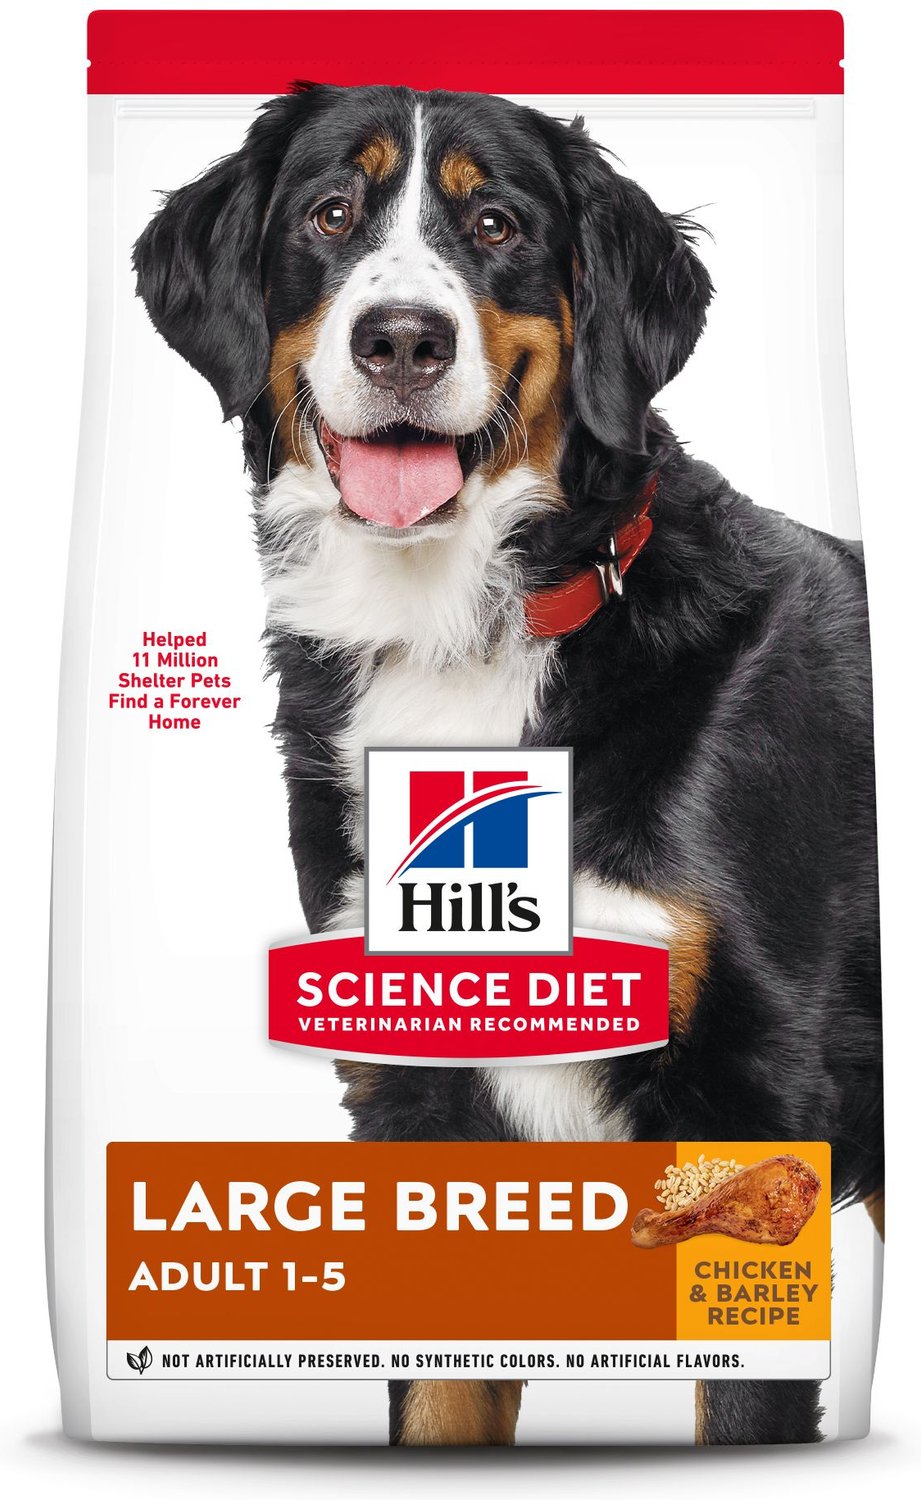 Science Diet Dog Food Feeding Chart